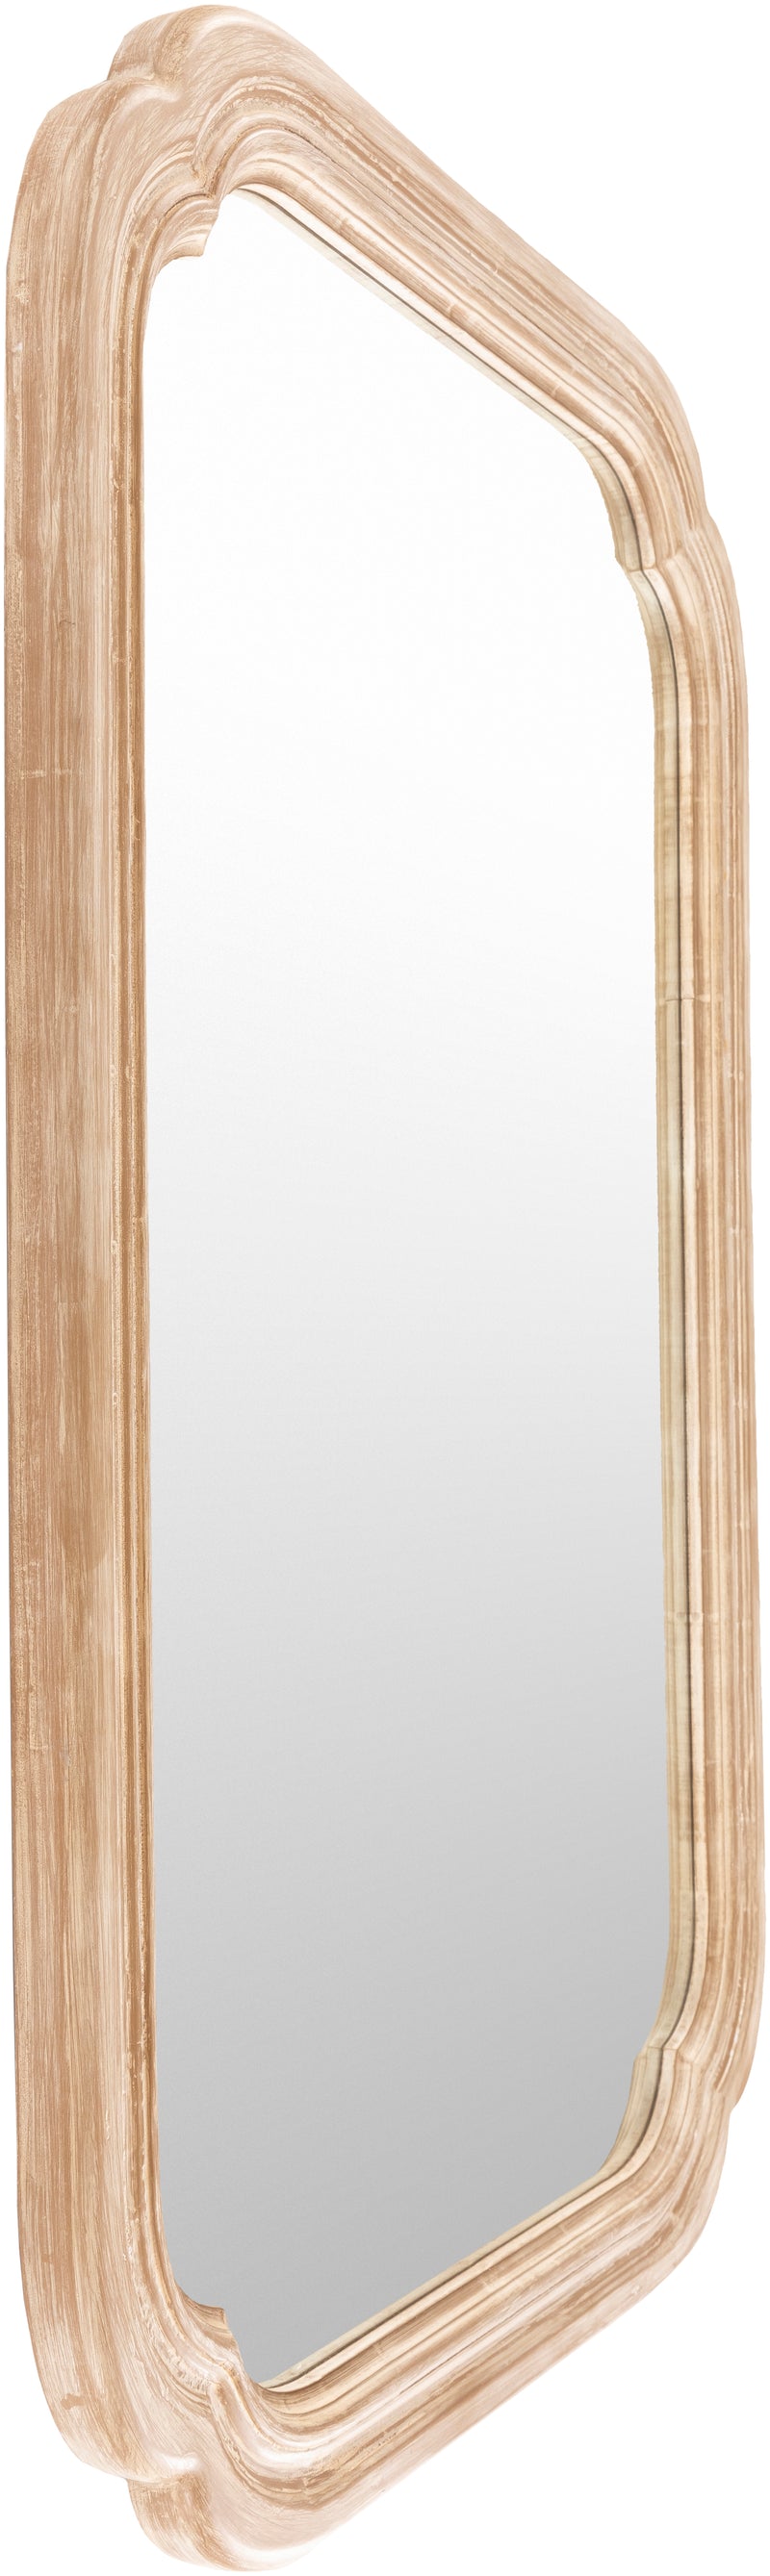 media image for Harlan HRL-001 Rectangular Mirror in Natural by Surya 289